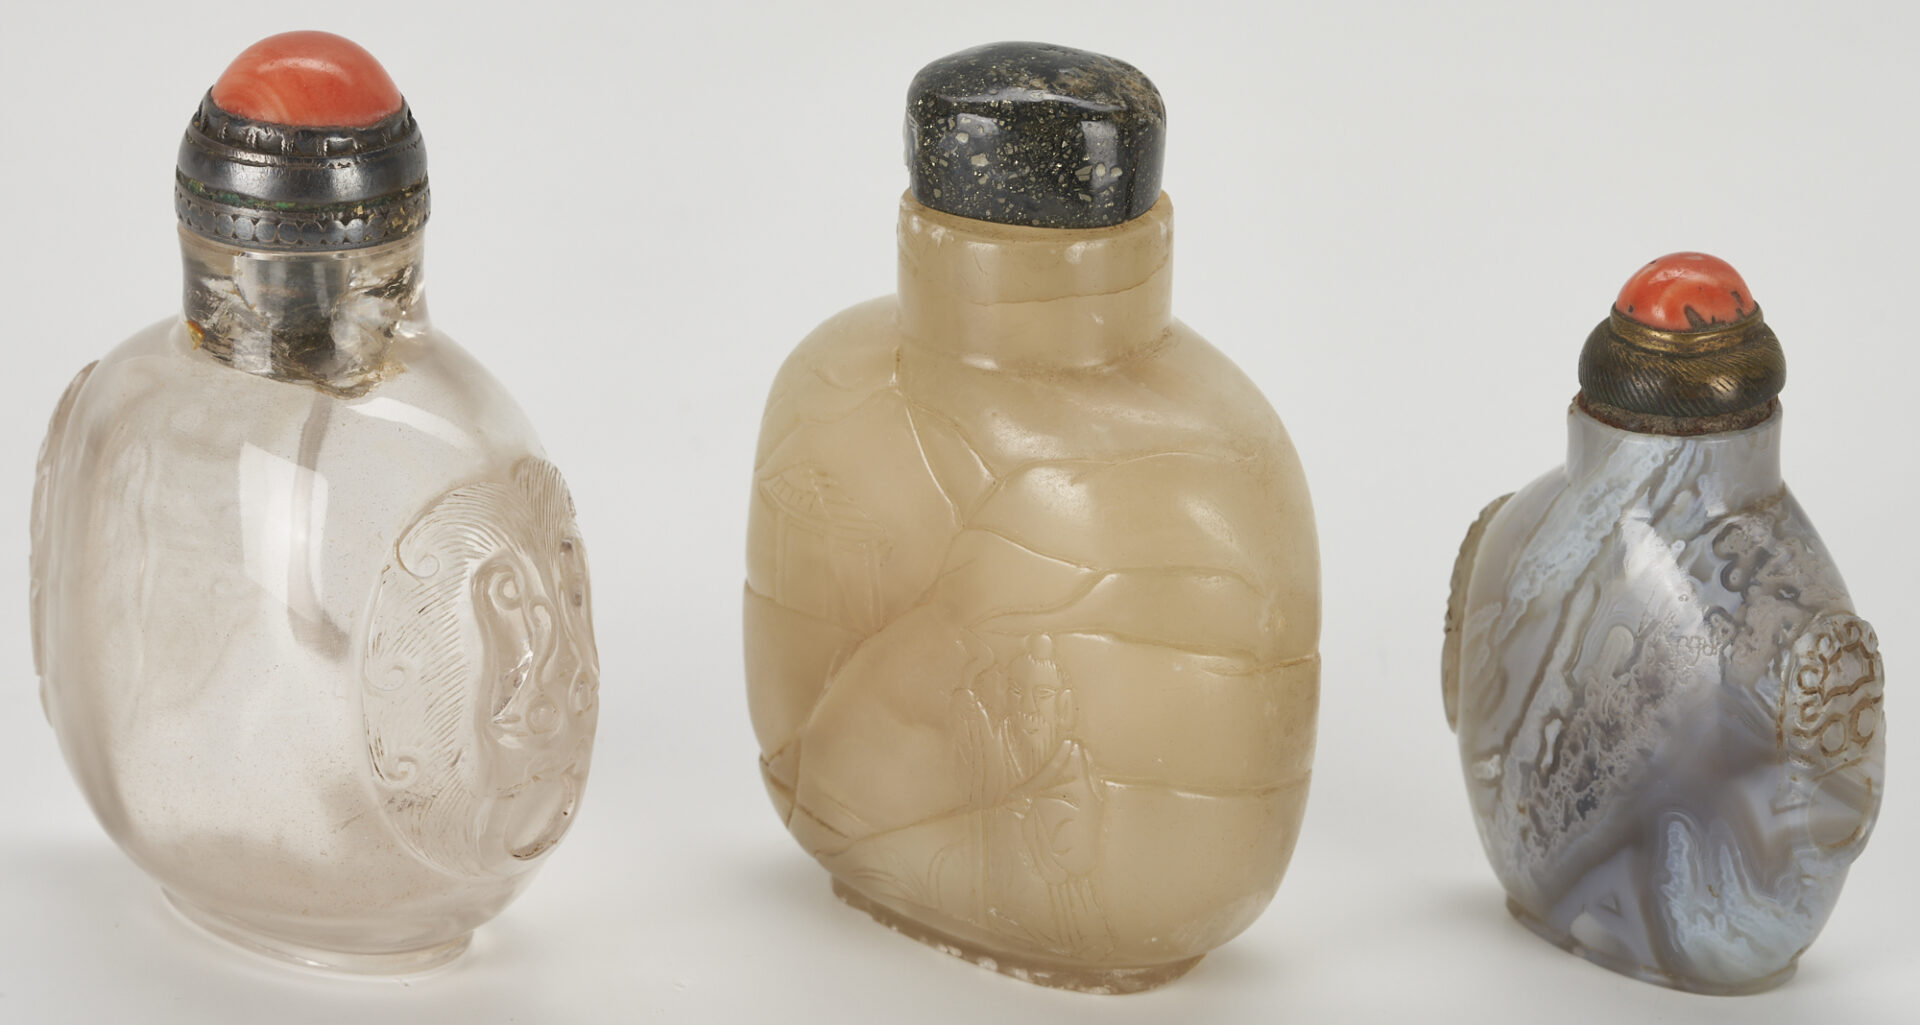 Lot 3: 5 Carved Asian Snuff Bottles, incl. Lapis, Rock Quartz, Hardstone, Agate